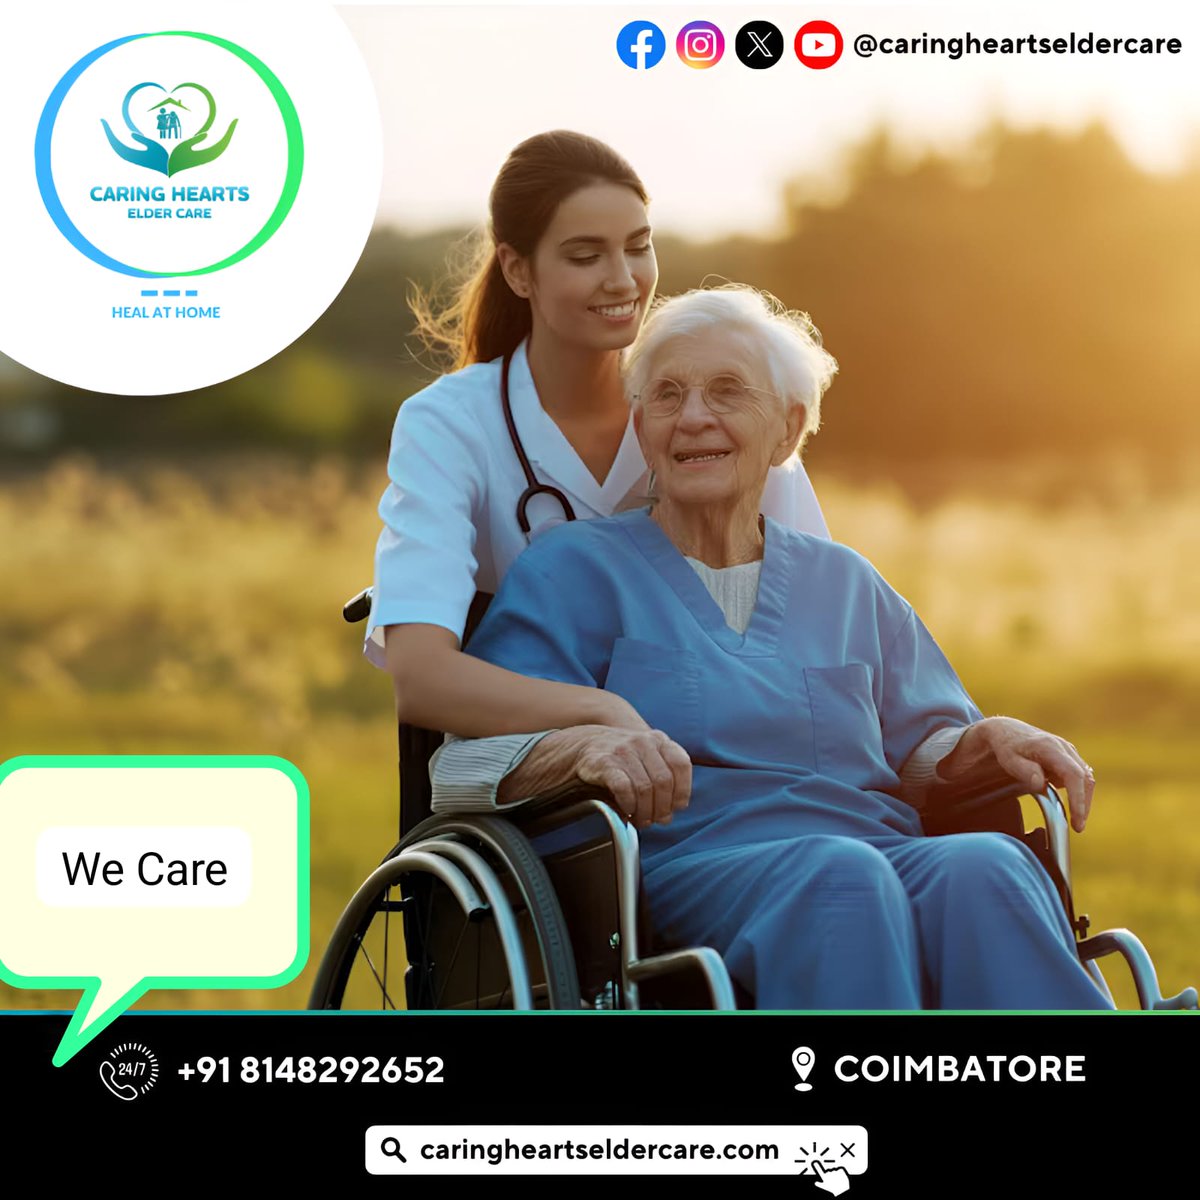 Why Choose @caringheartsEC 

#caringheartseldercare #homecare #eldercare #Chennai #Coimbatore #thursday #Hyderabad #Mumbai #Kerala #bangalore #uk #usa #tweet #careathome #best #homecareagency #rspuram #Hospital #Assistedliving #services #wecare #love #Agency #India #news #care